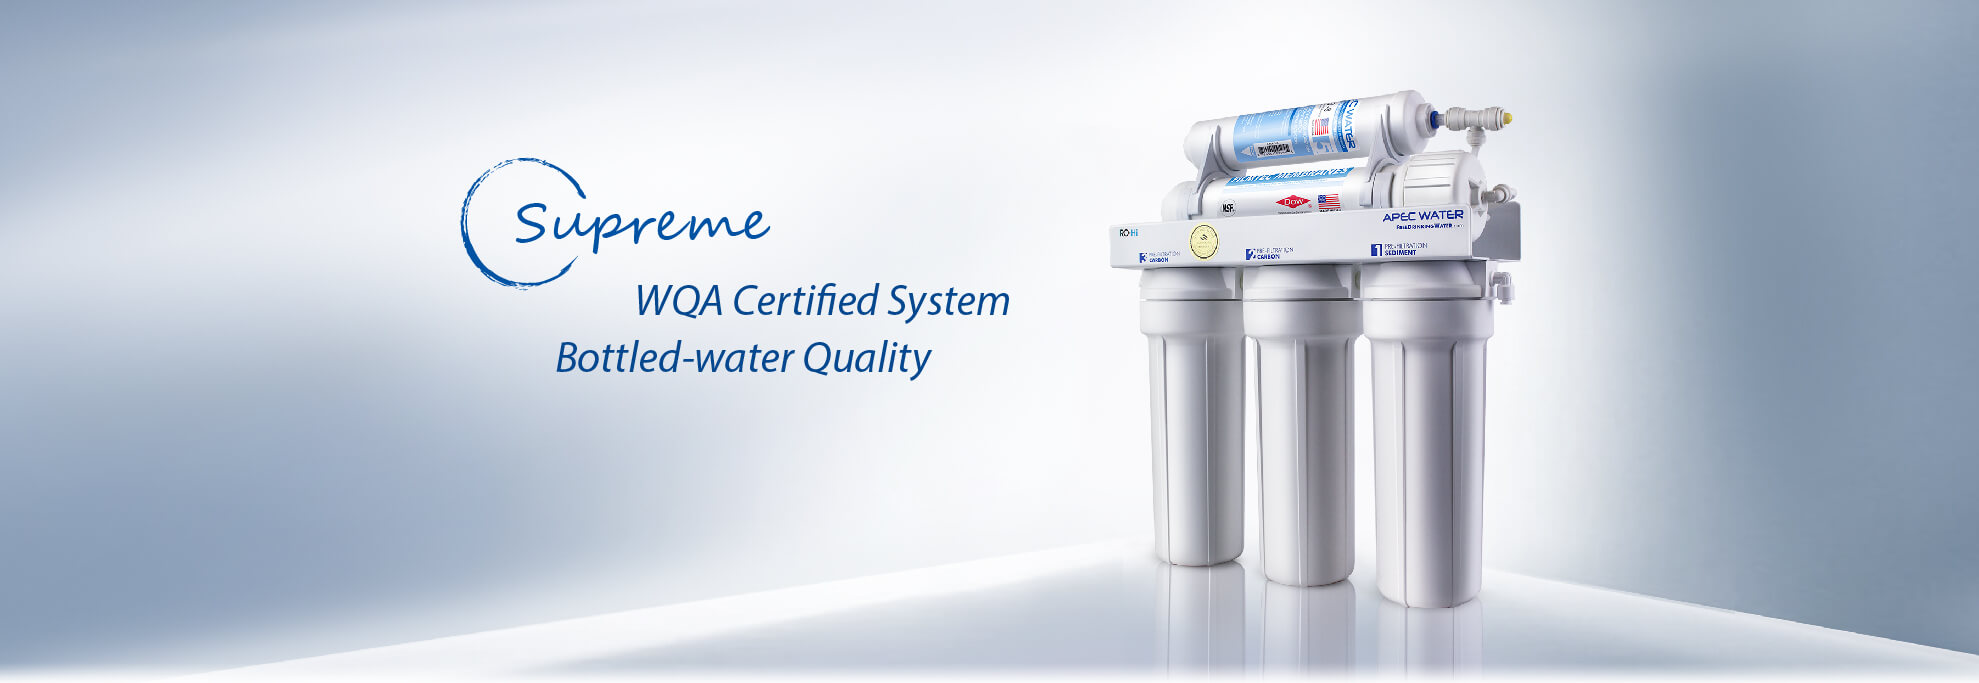 WQA认证的系统瓶装水质量